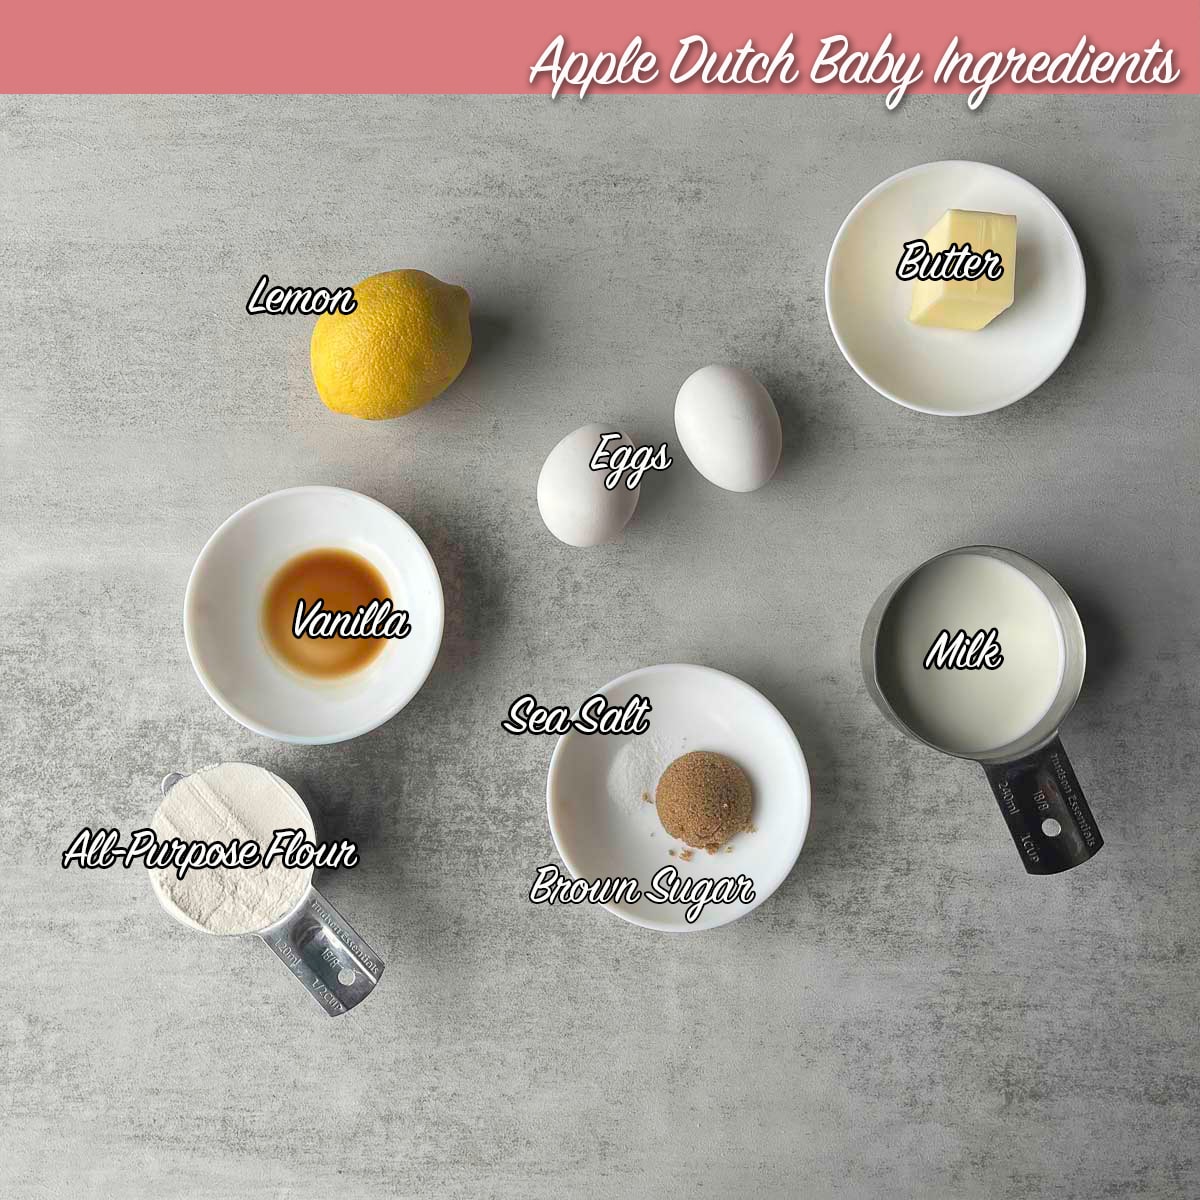 Apple Dutch baby ingredients